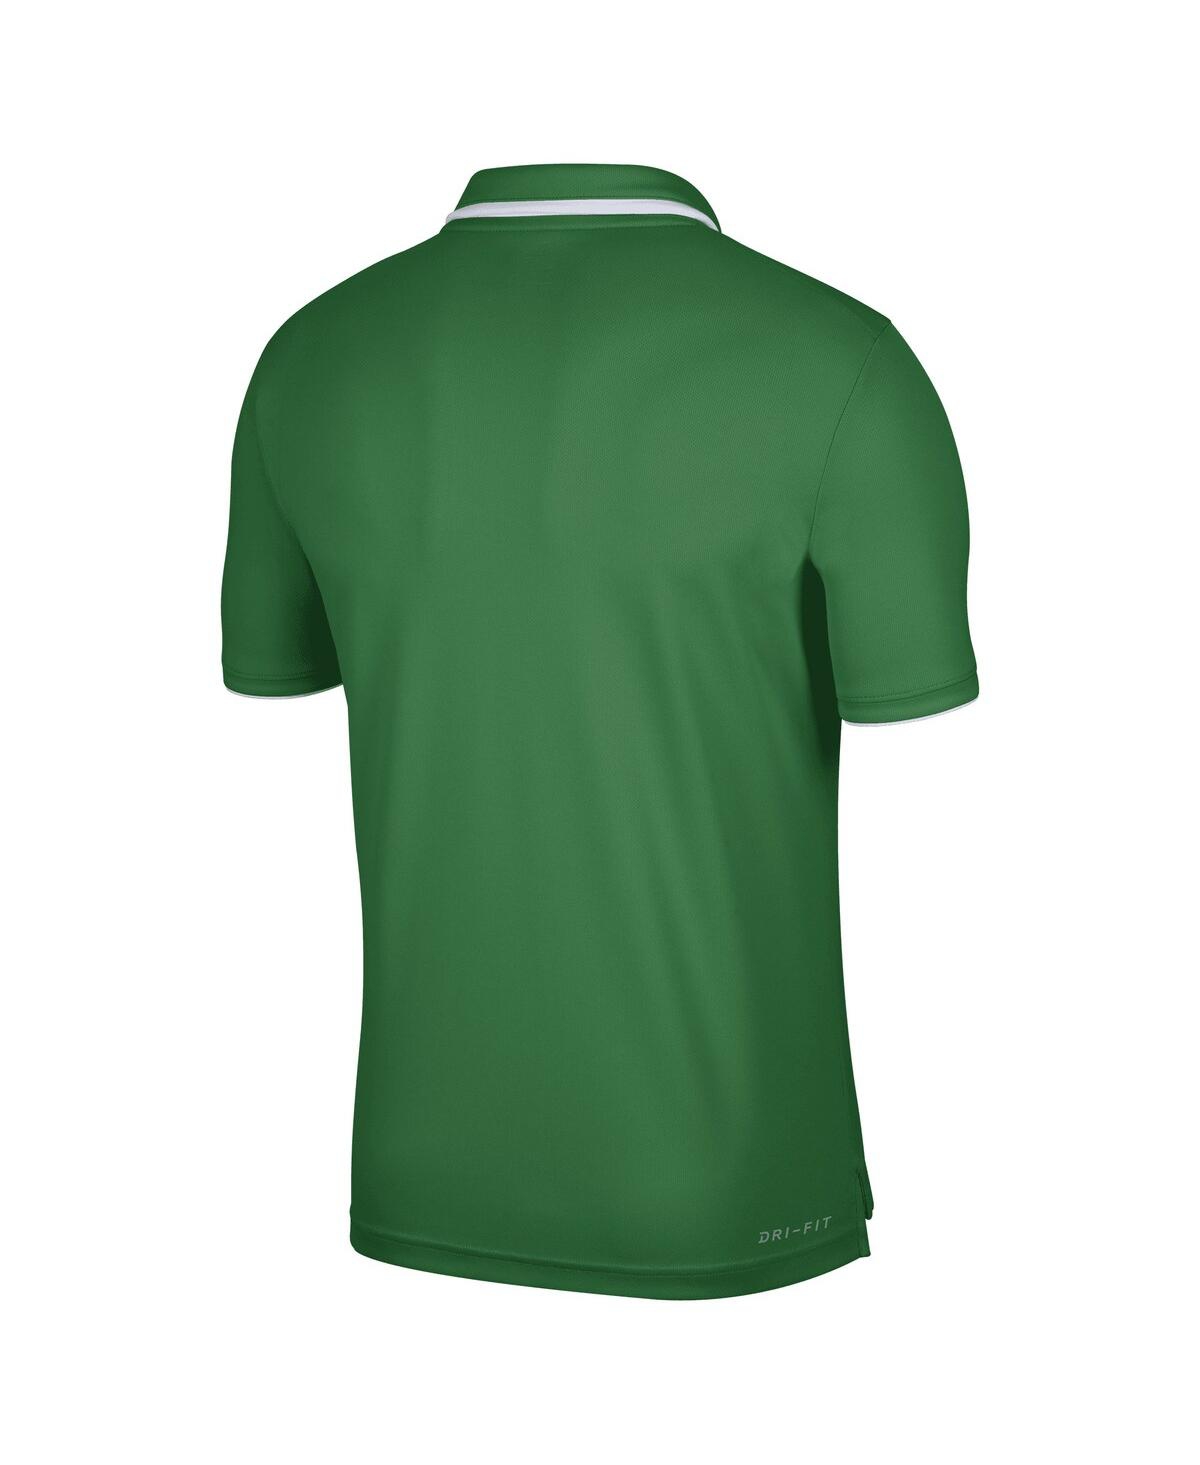 Shop Nike Men's  Green Oregon Ducks Wordmark Performance Polo Shirt